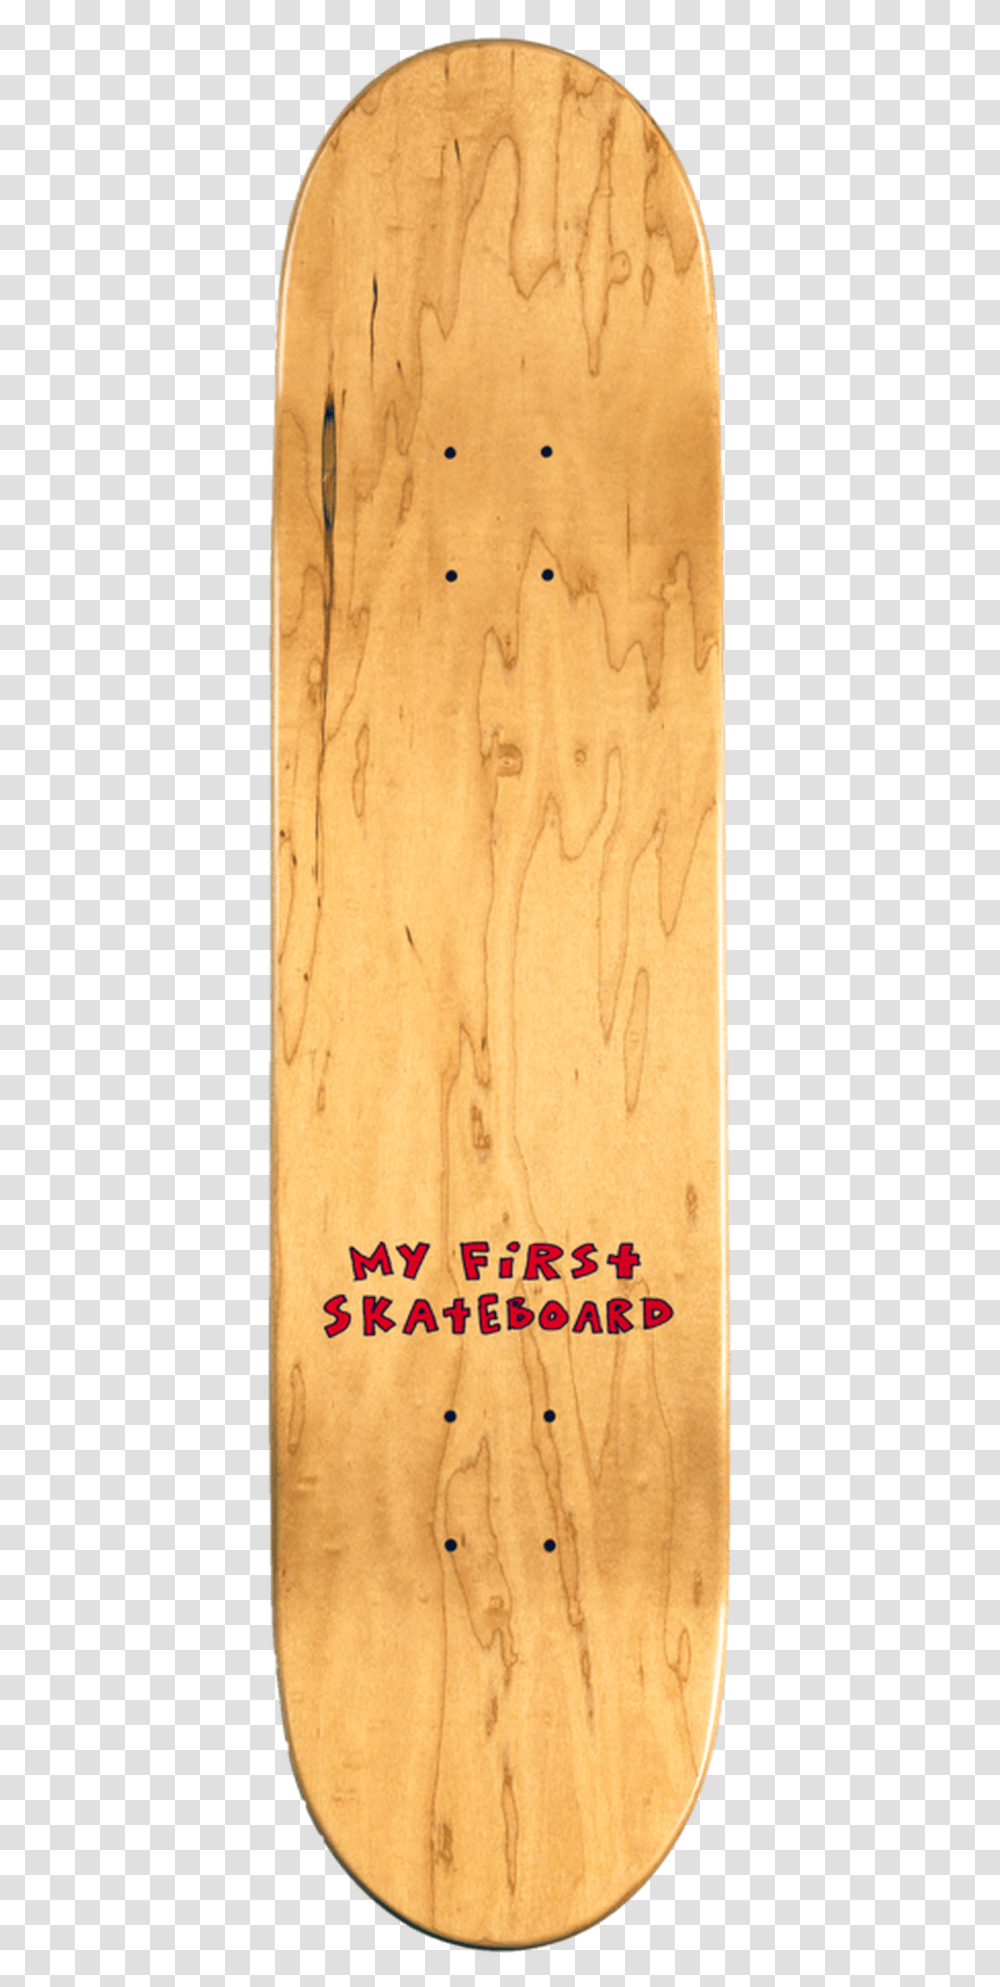 My First Skateboard Deck Skateboard Deck, Wood, Plywood, Texture Transparent Png